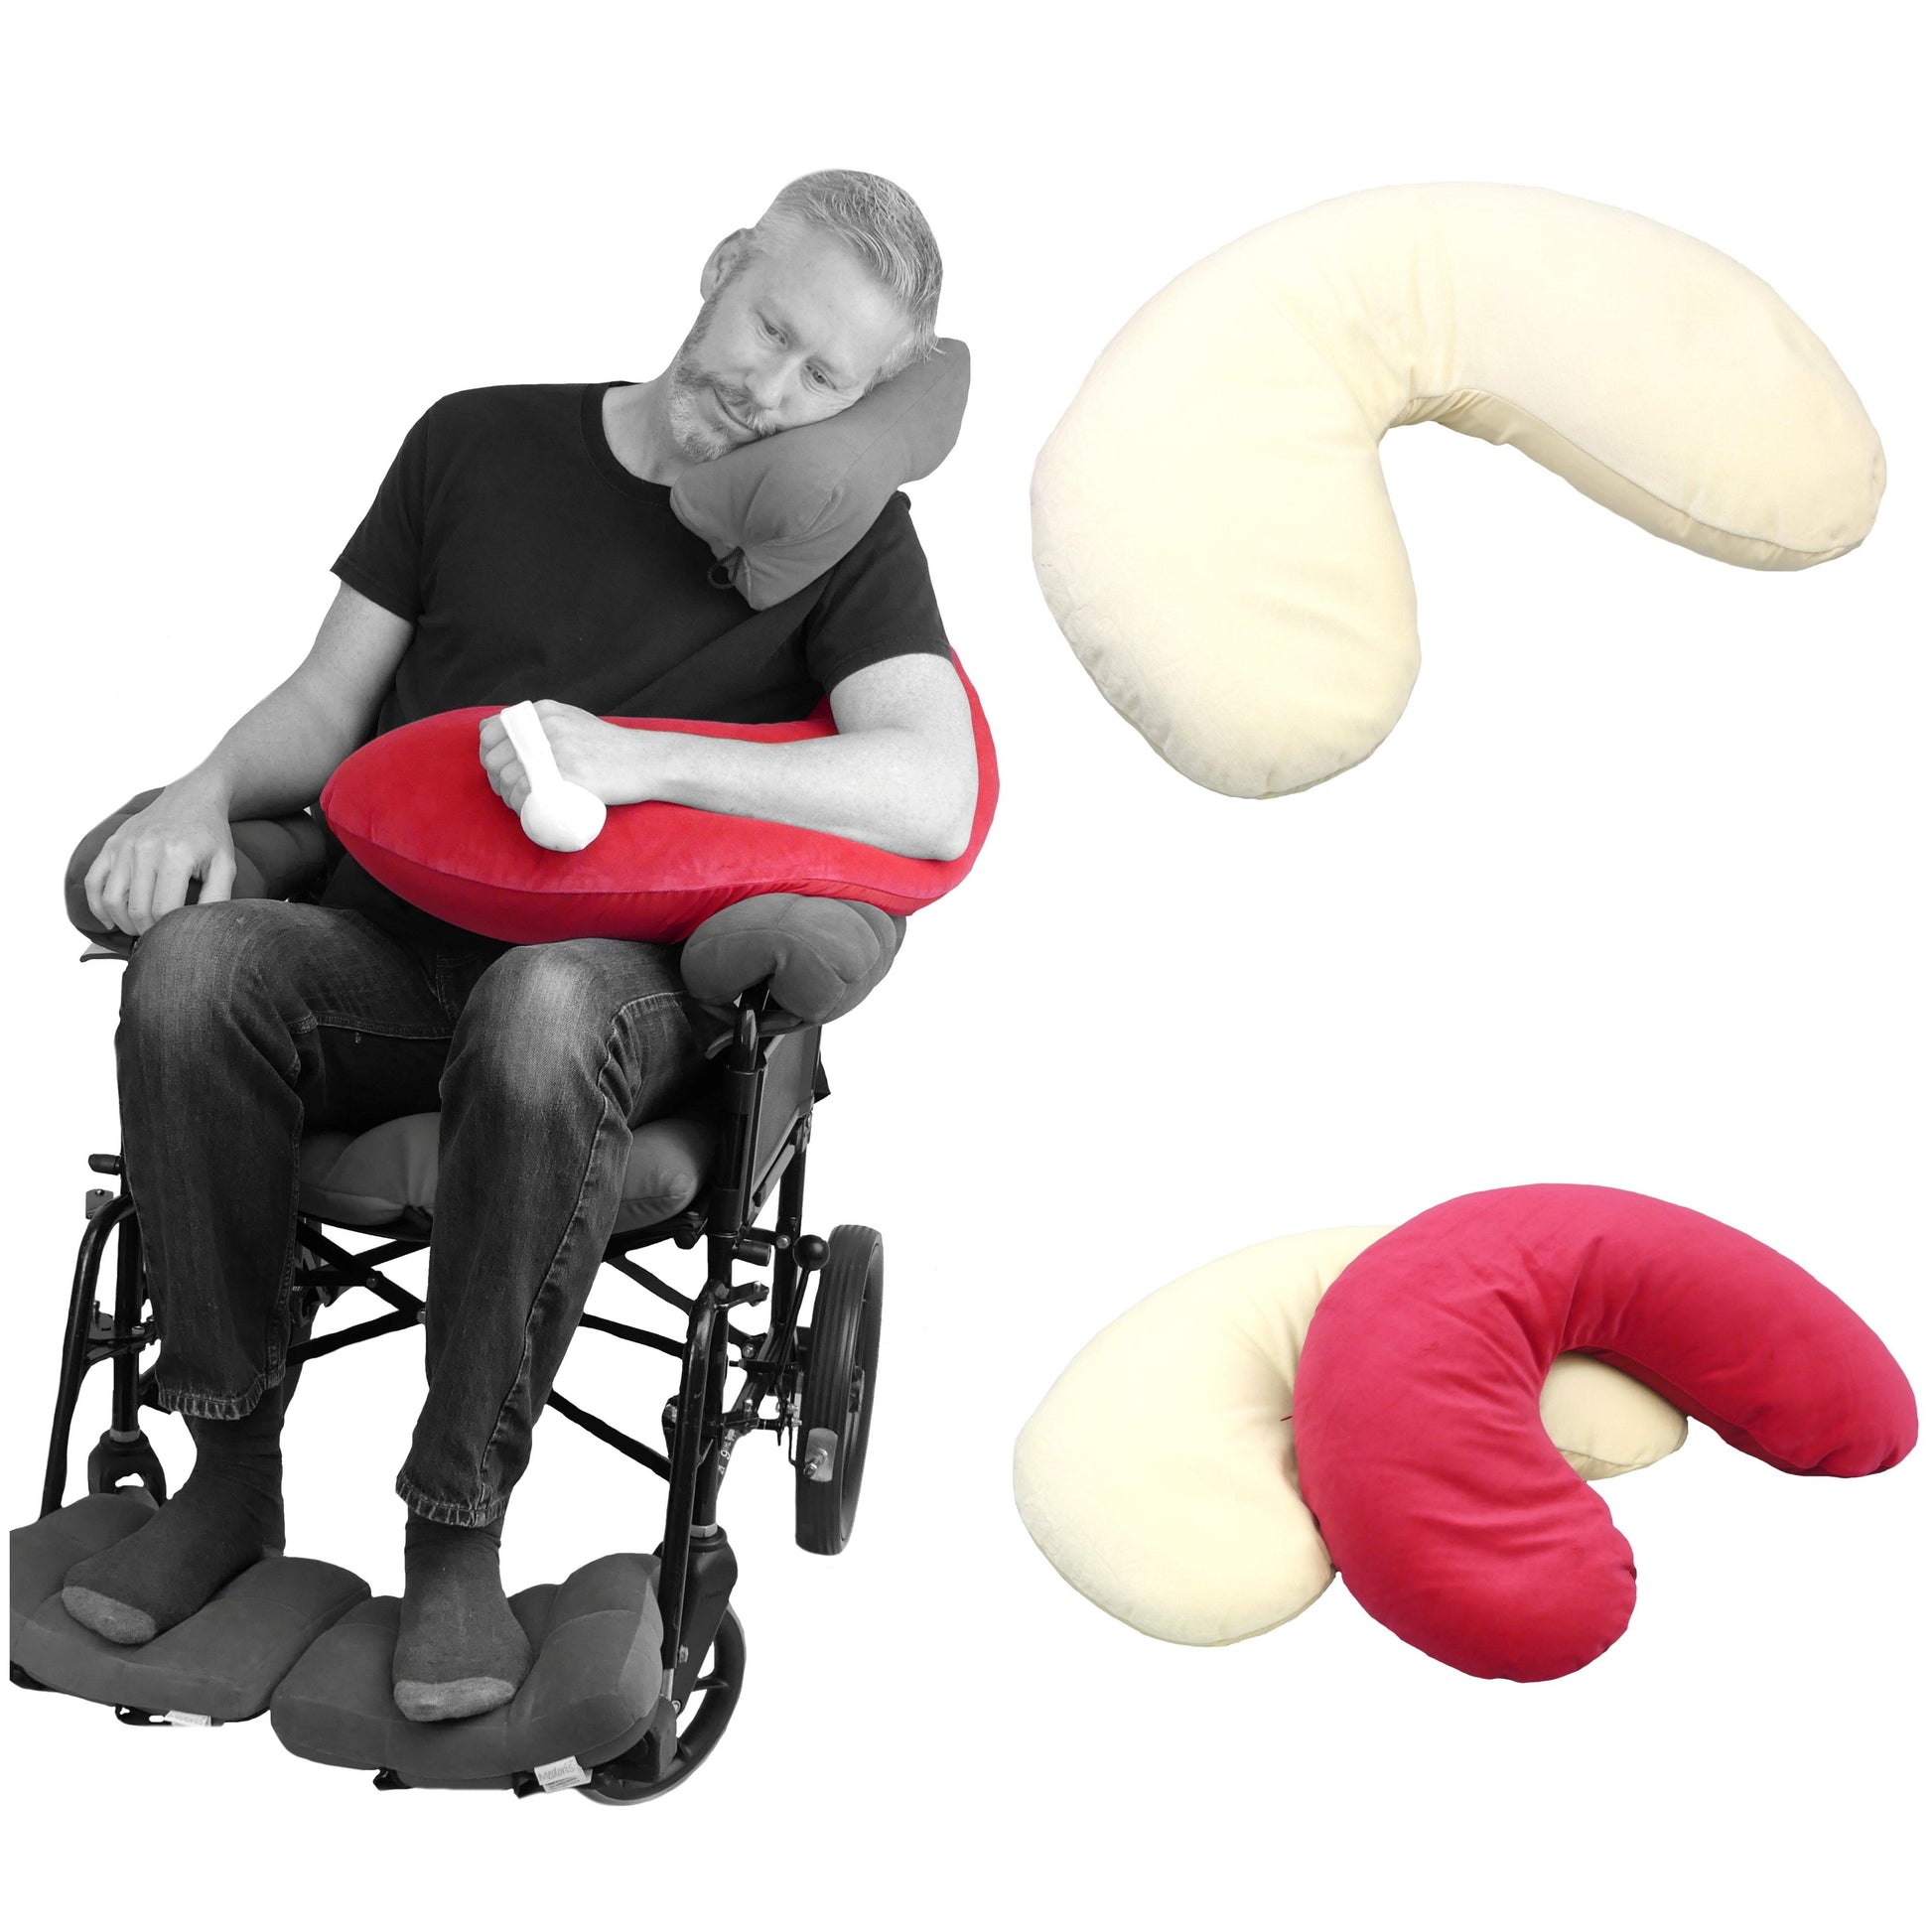  orthopedic seat cushion spine